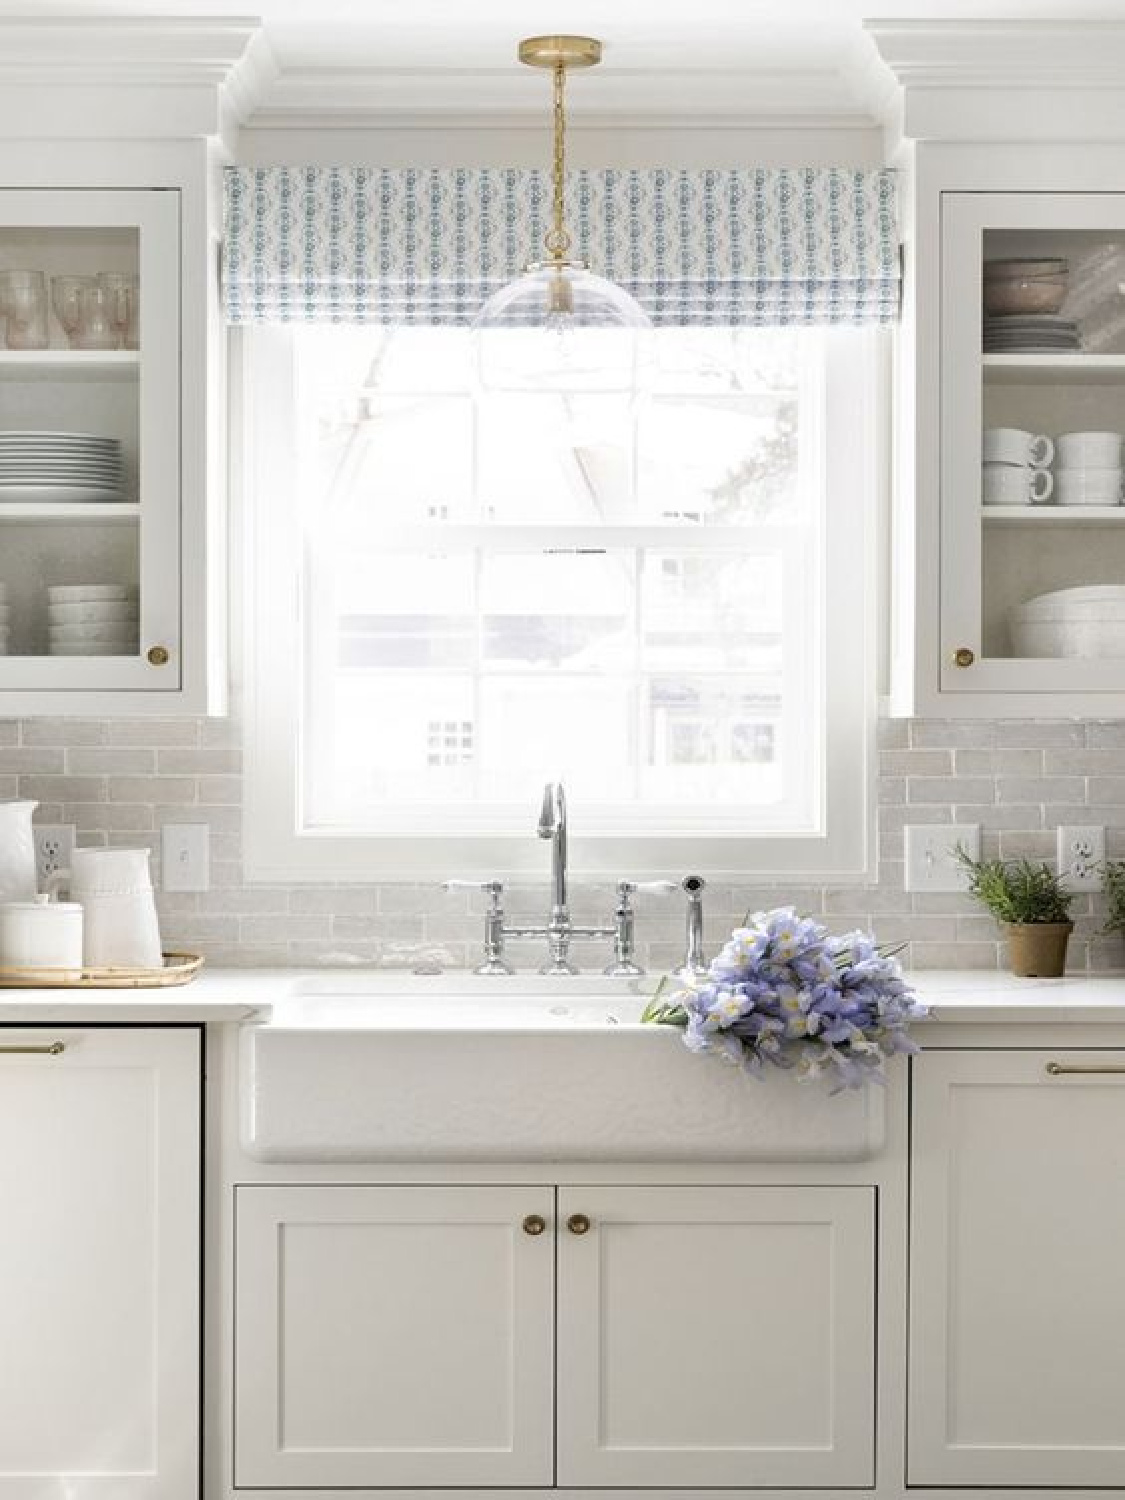 Blue and white kitchen with farm sink designed by Bria Hammel. #blueandwhite #kitchendesign